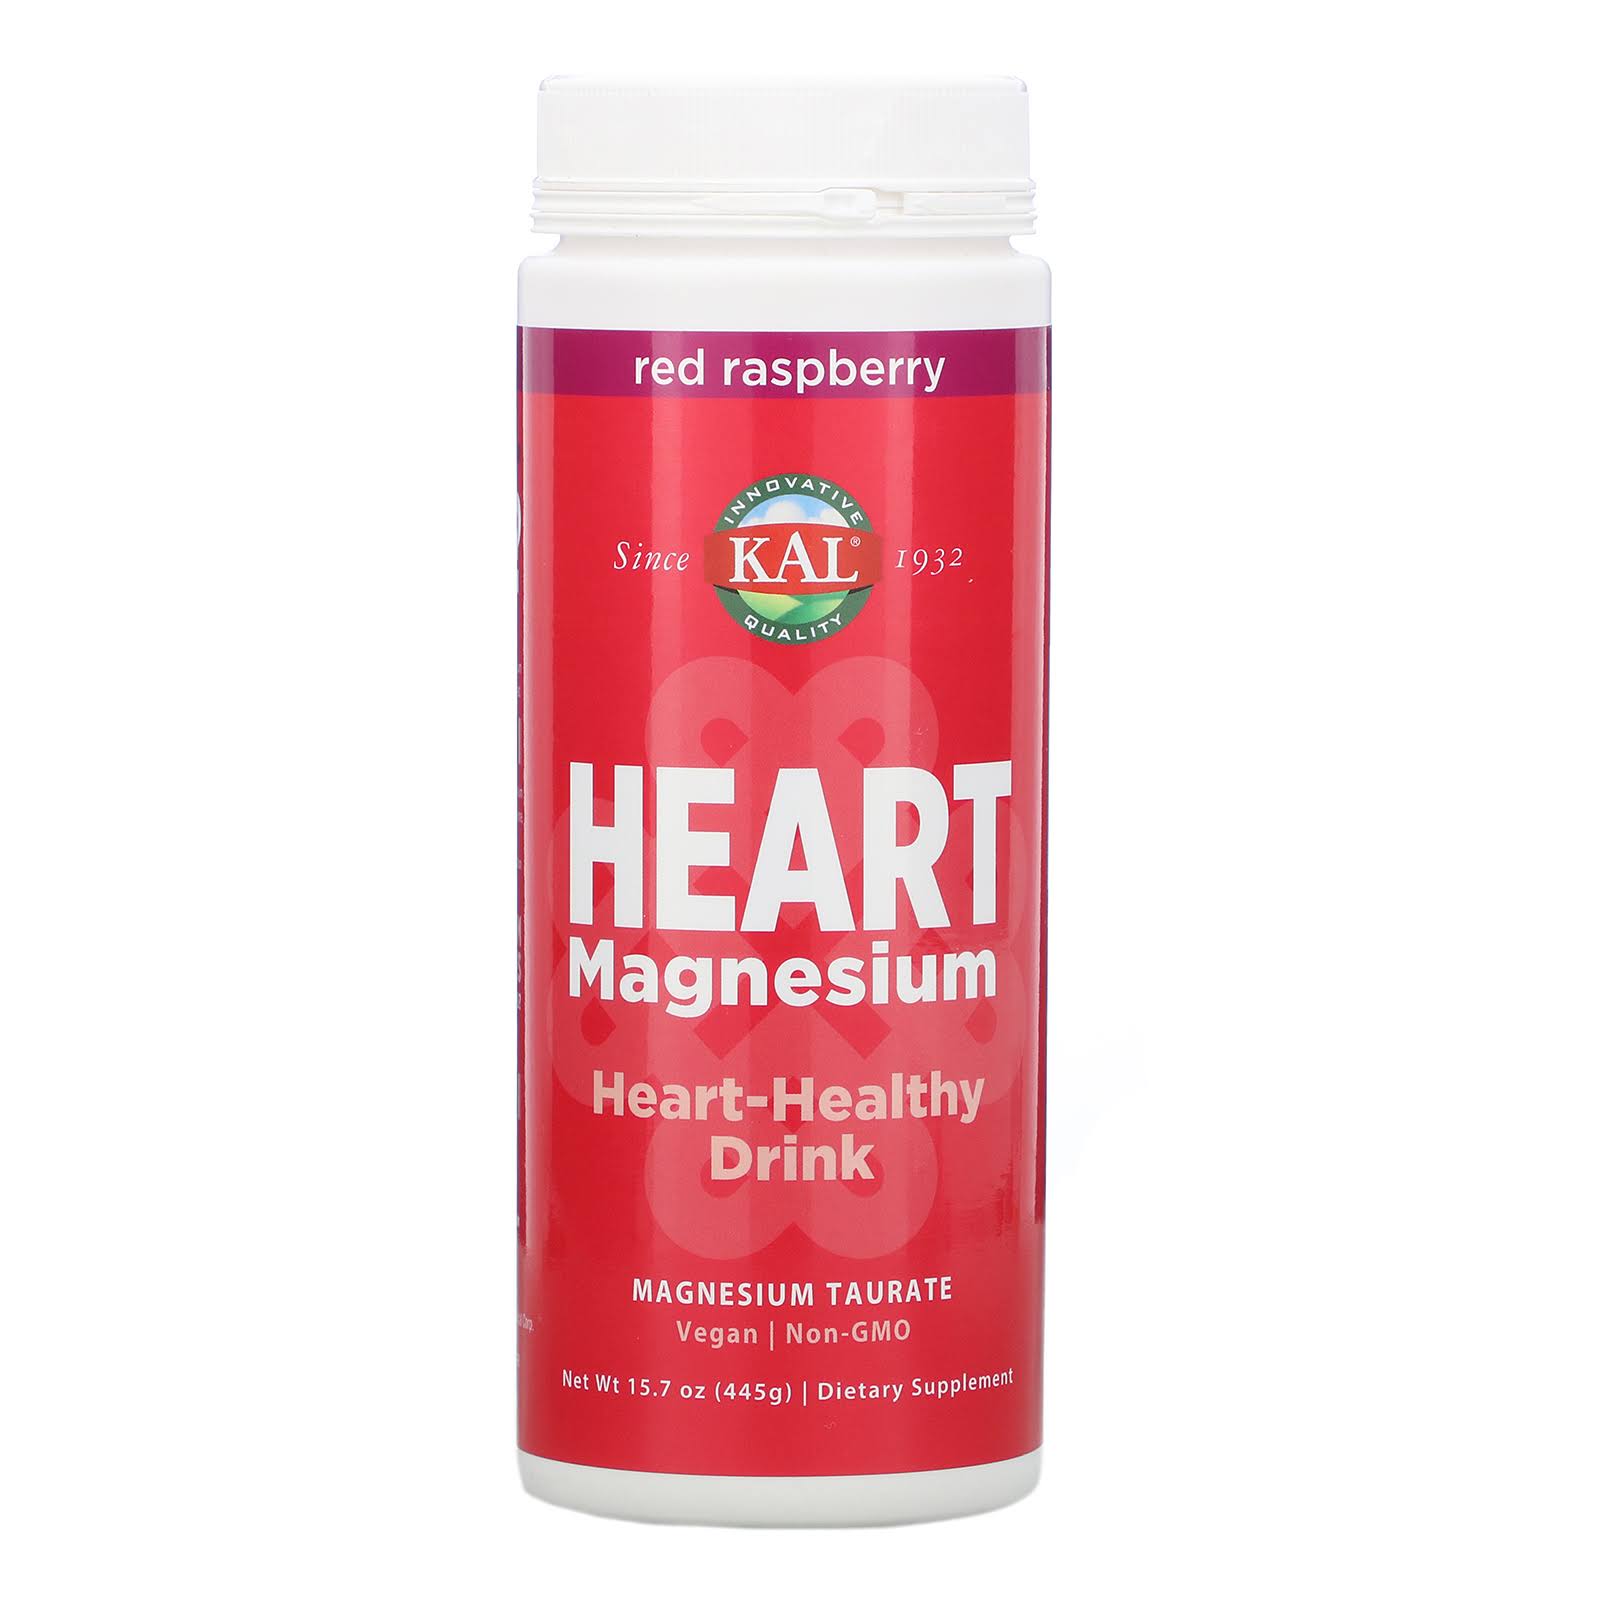 Kal - Heart Magnesium, Red Raspberry - 15.7 oz (445 Grams)